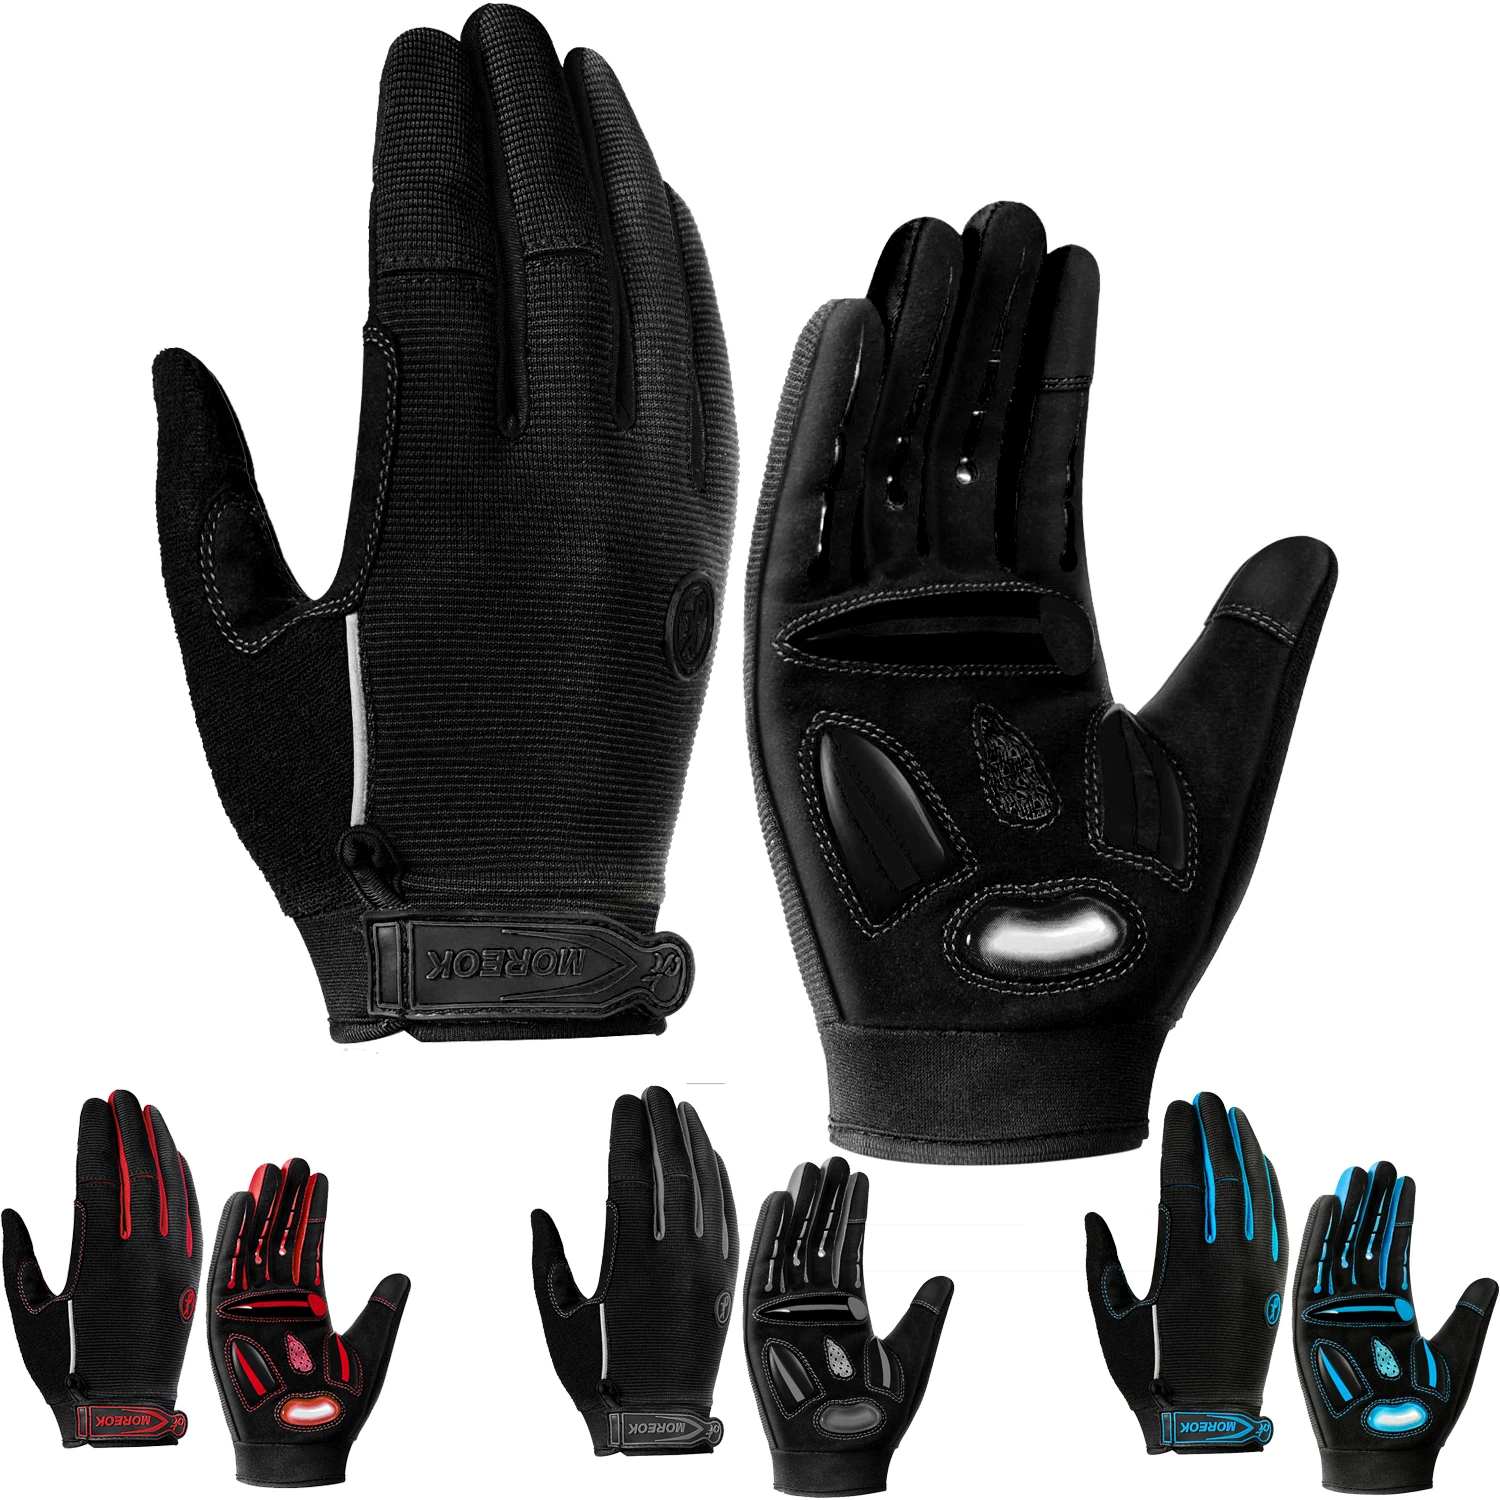 

MOREOK Cycling Gloves 5MM SBR+Liquid Gel Padded Full Finger Winter Gloves Touchscreen Glove Anti-Slip Shock-Absorbing Mittens